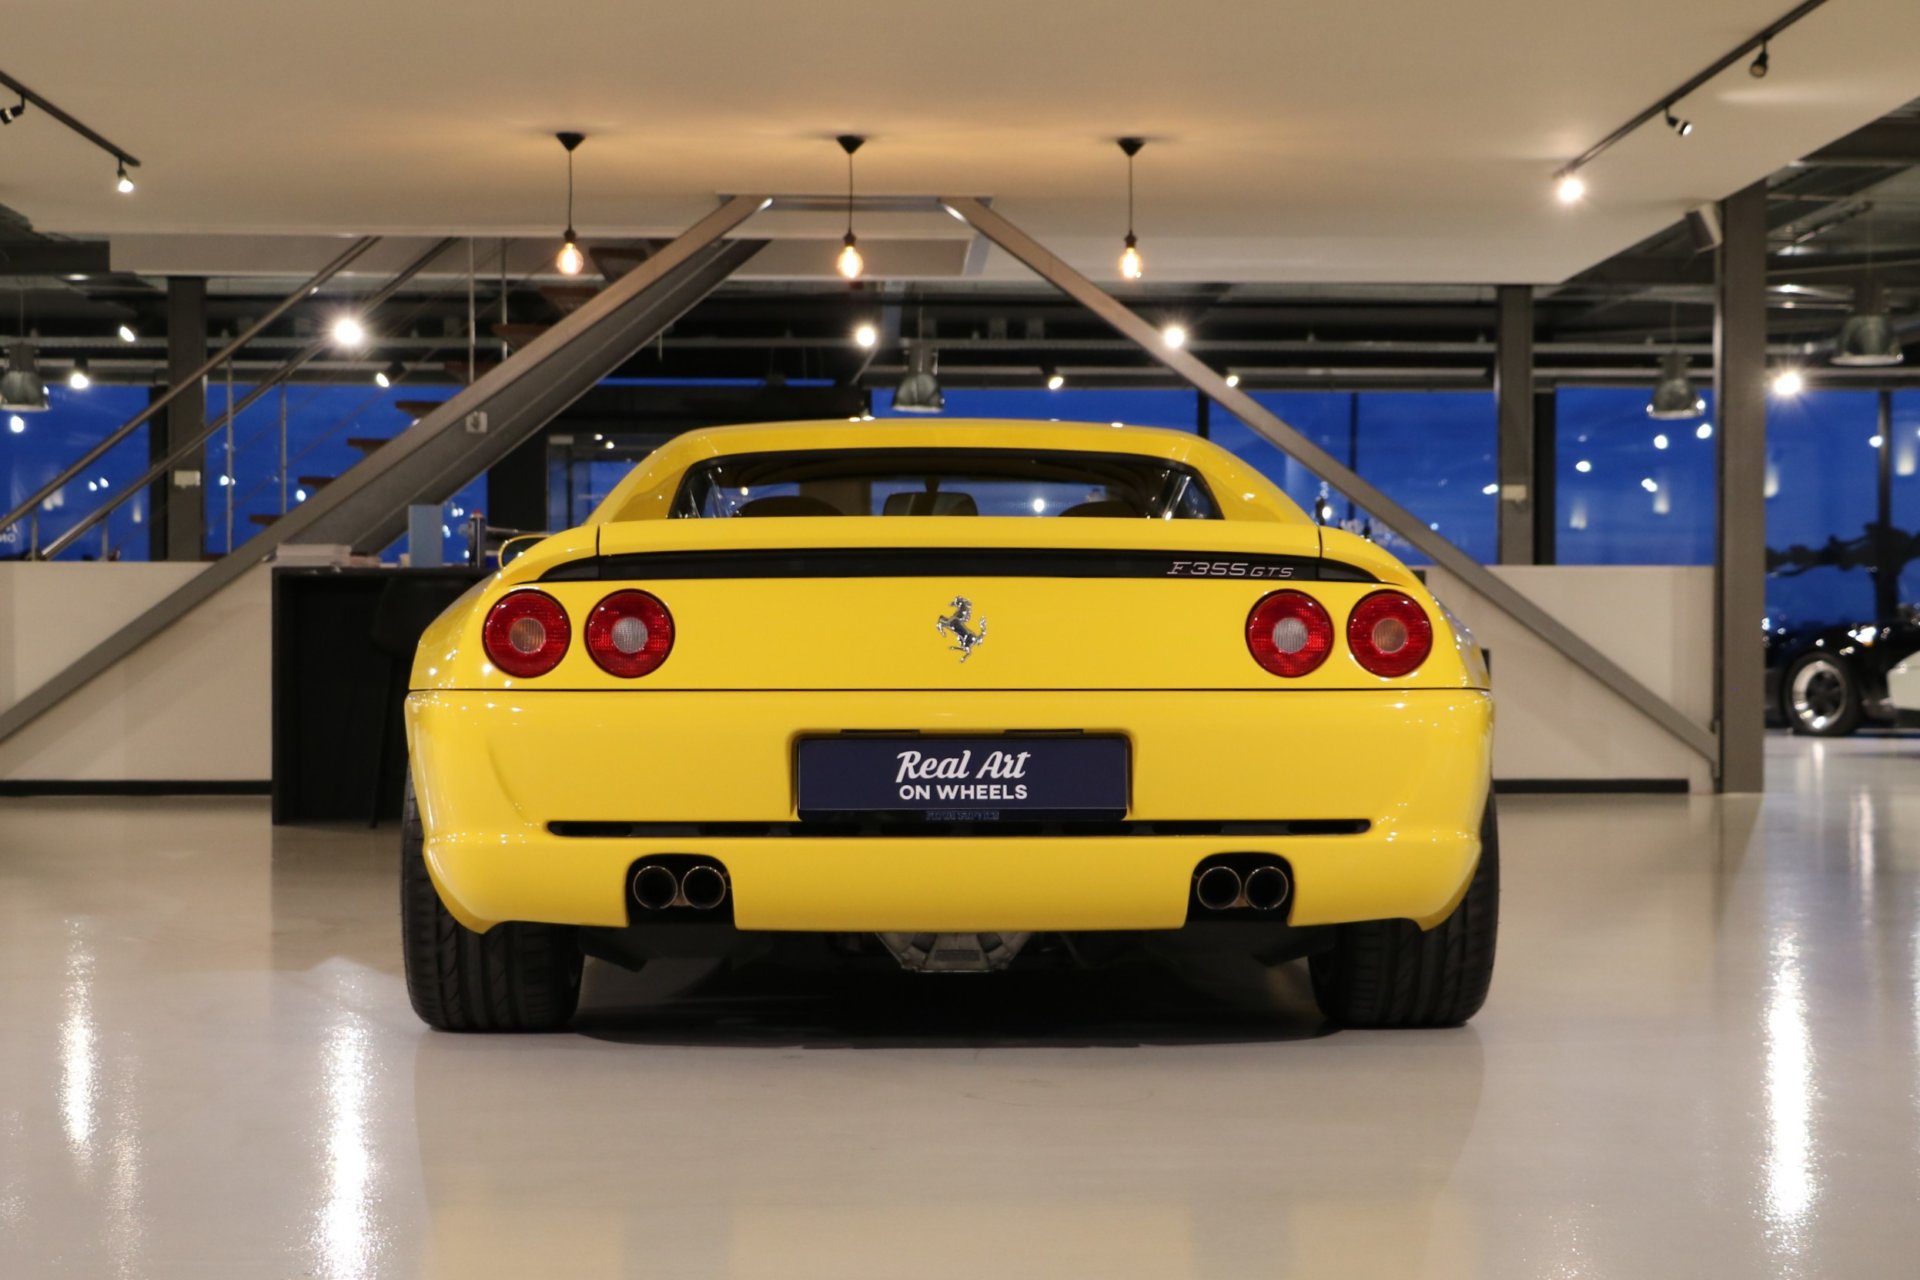 Real Art on Wheels | Ferrari F355 GTS Giallo Modena